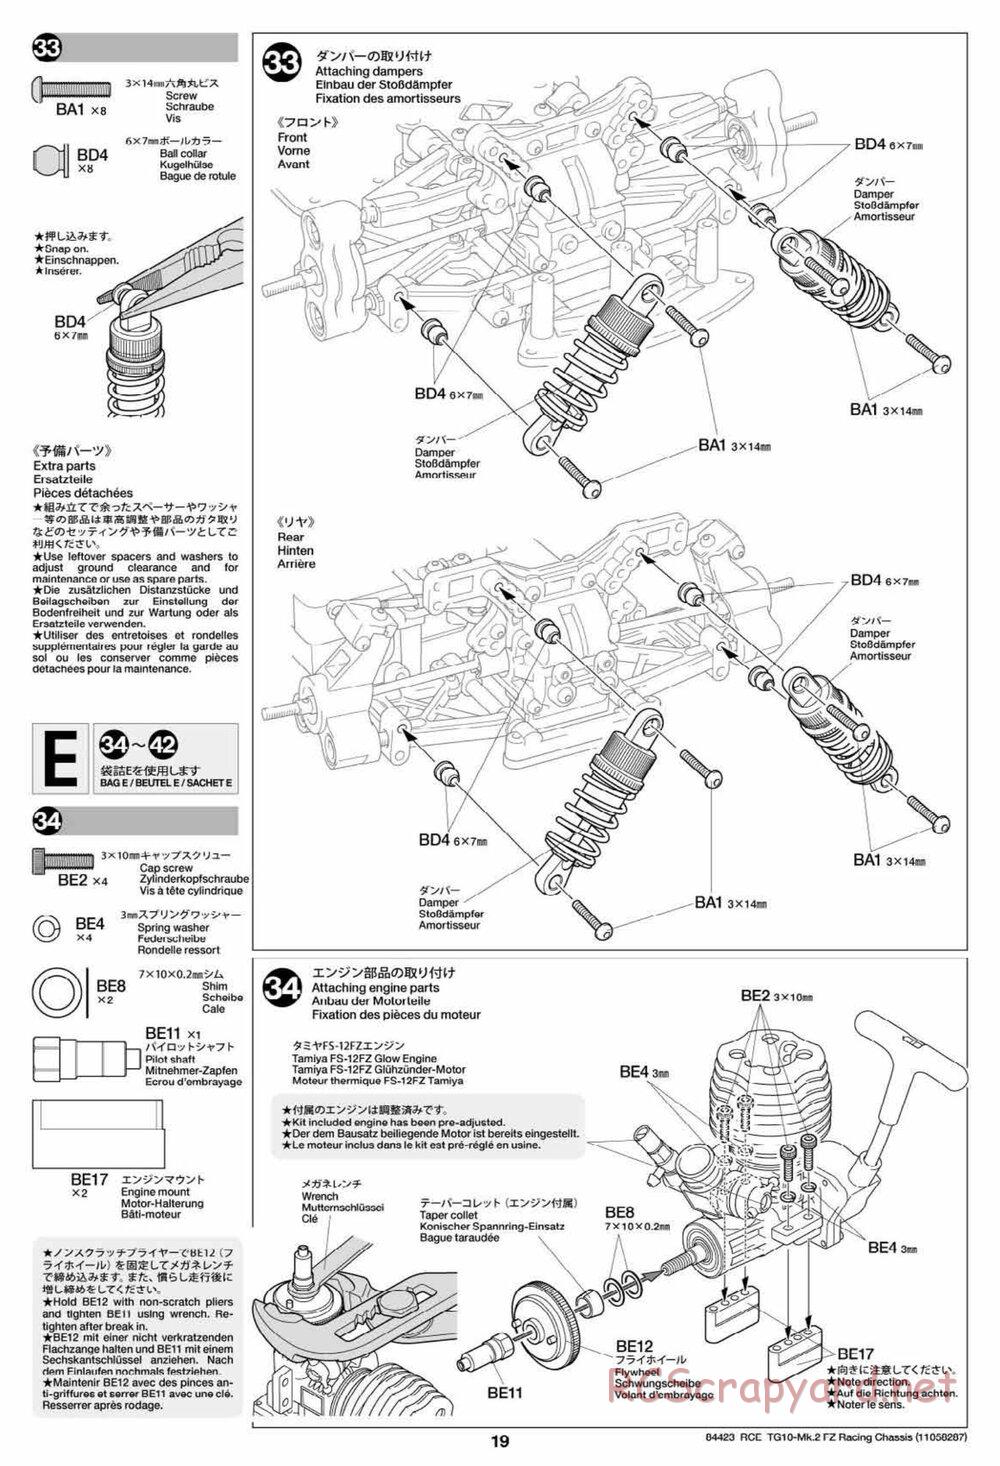 Tamiya - TG10 Mk.2 FZ Racing Chassis - Manual - Page 19